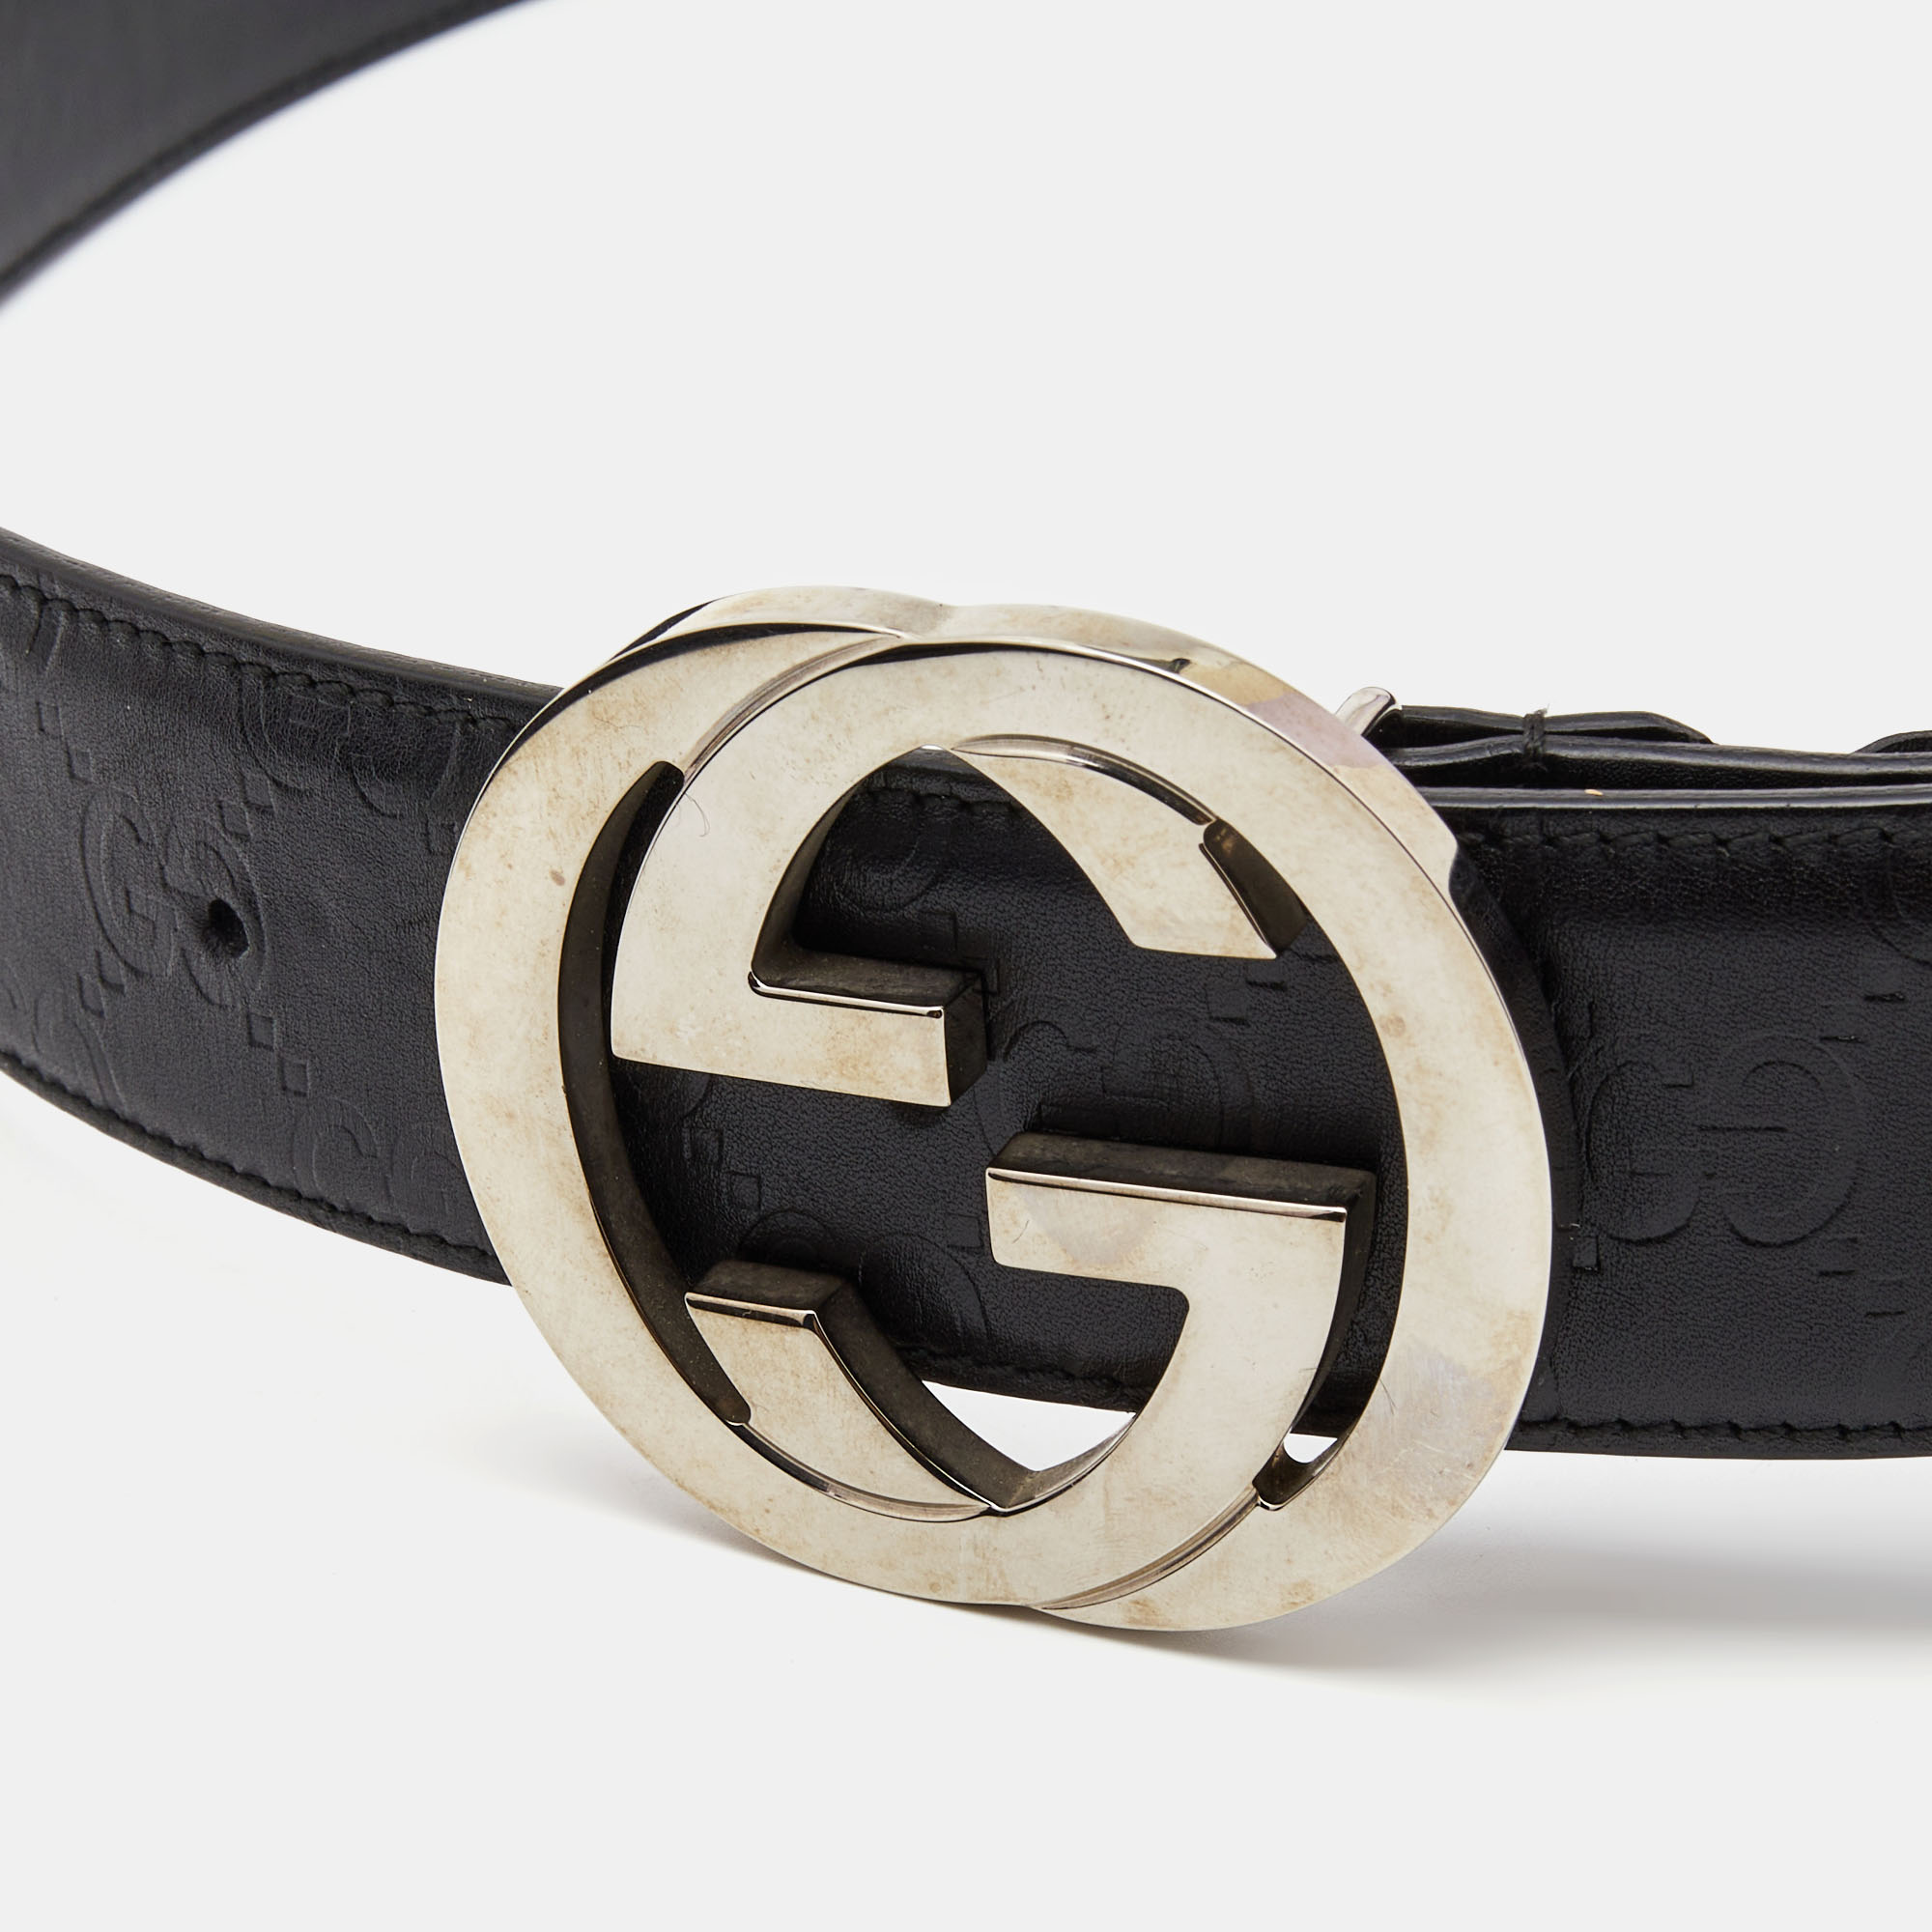 

Gucci Black Guccissima Leather Interlocking GG Buckle Belt